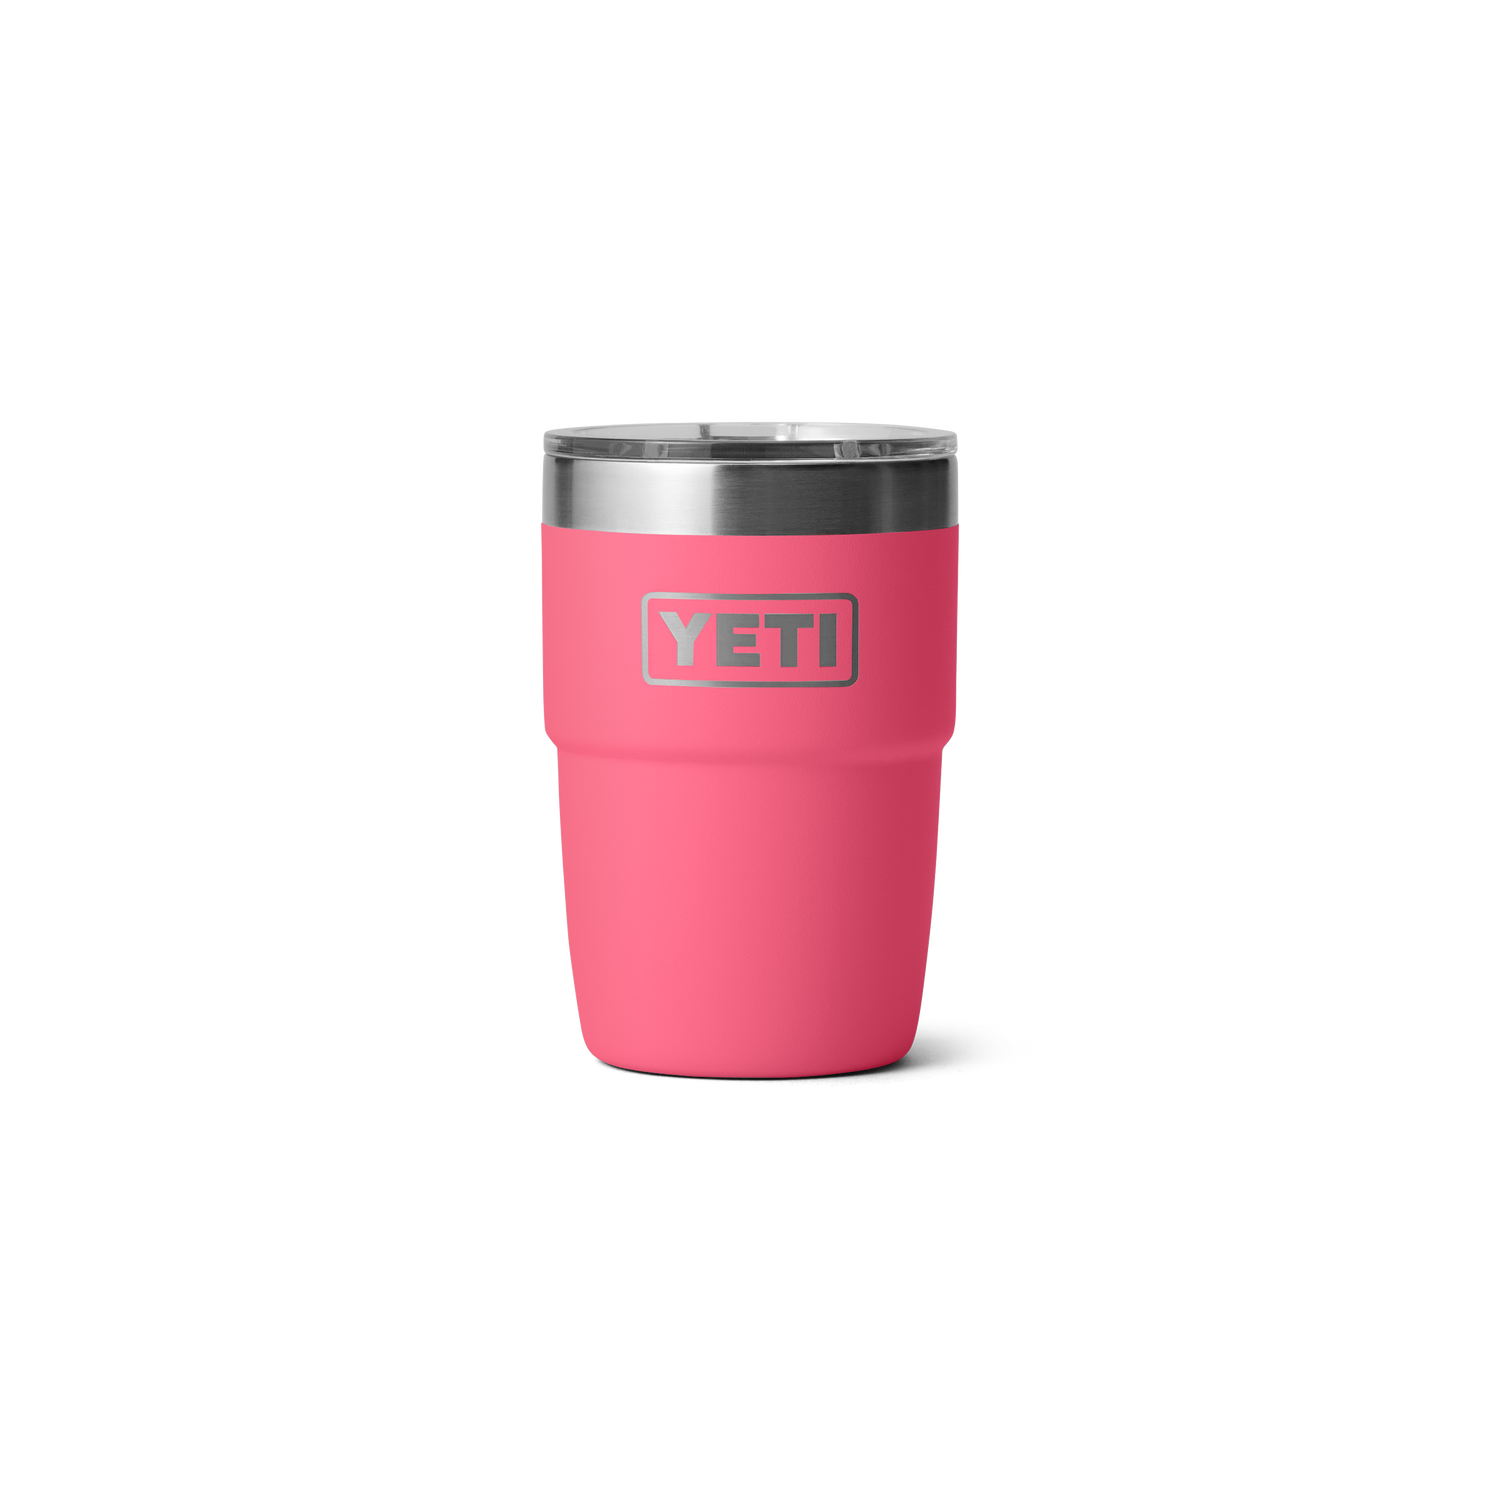 Yeti Rambler 8 oz Cup MS Tropical Pink